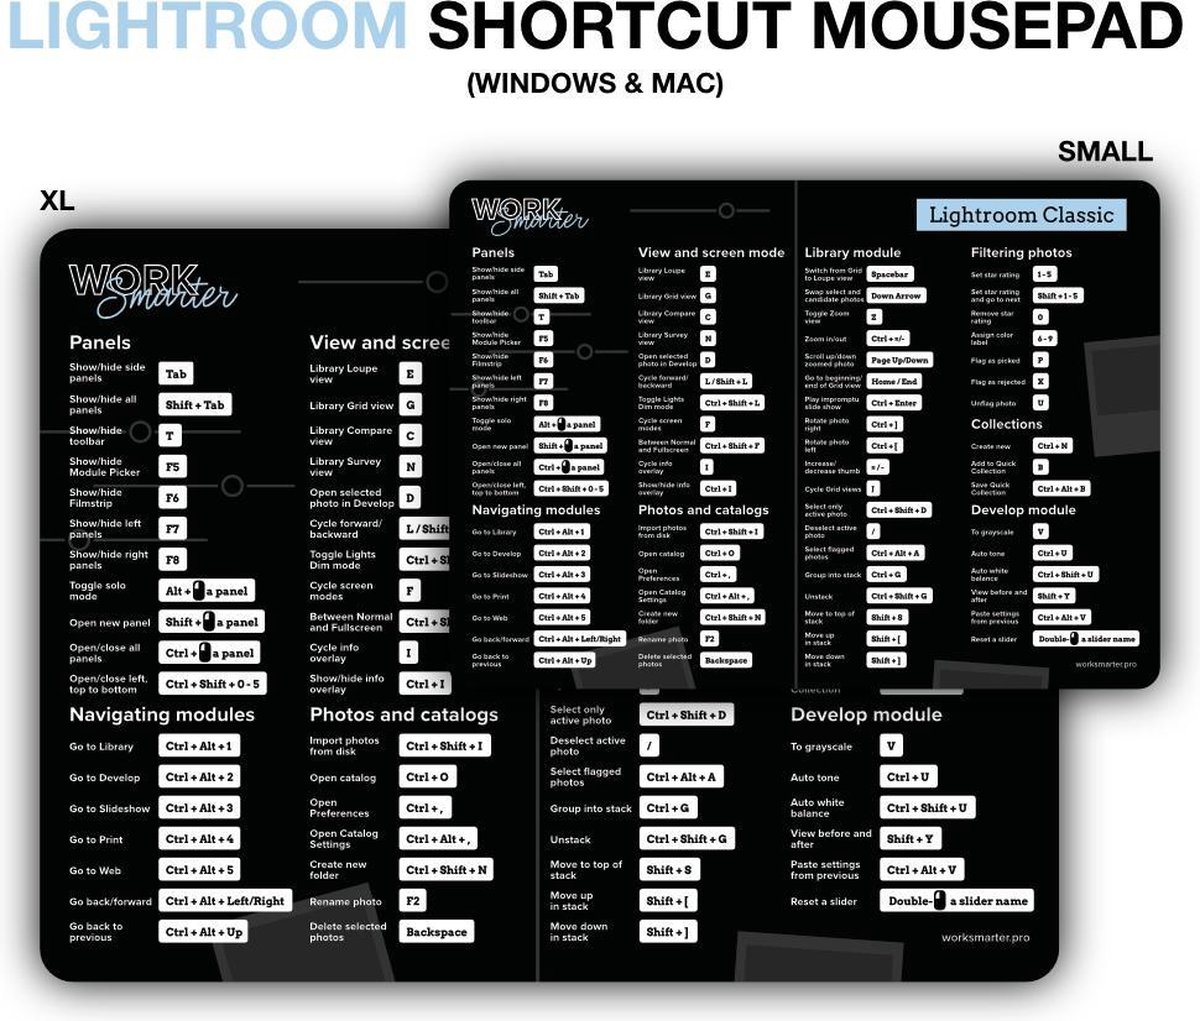 Adobe Lightroom Shortcut Mousepad - XL - Windows